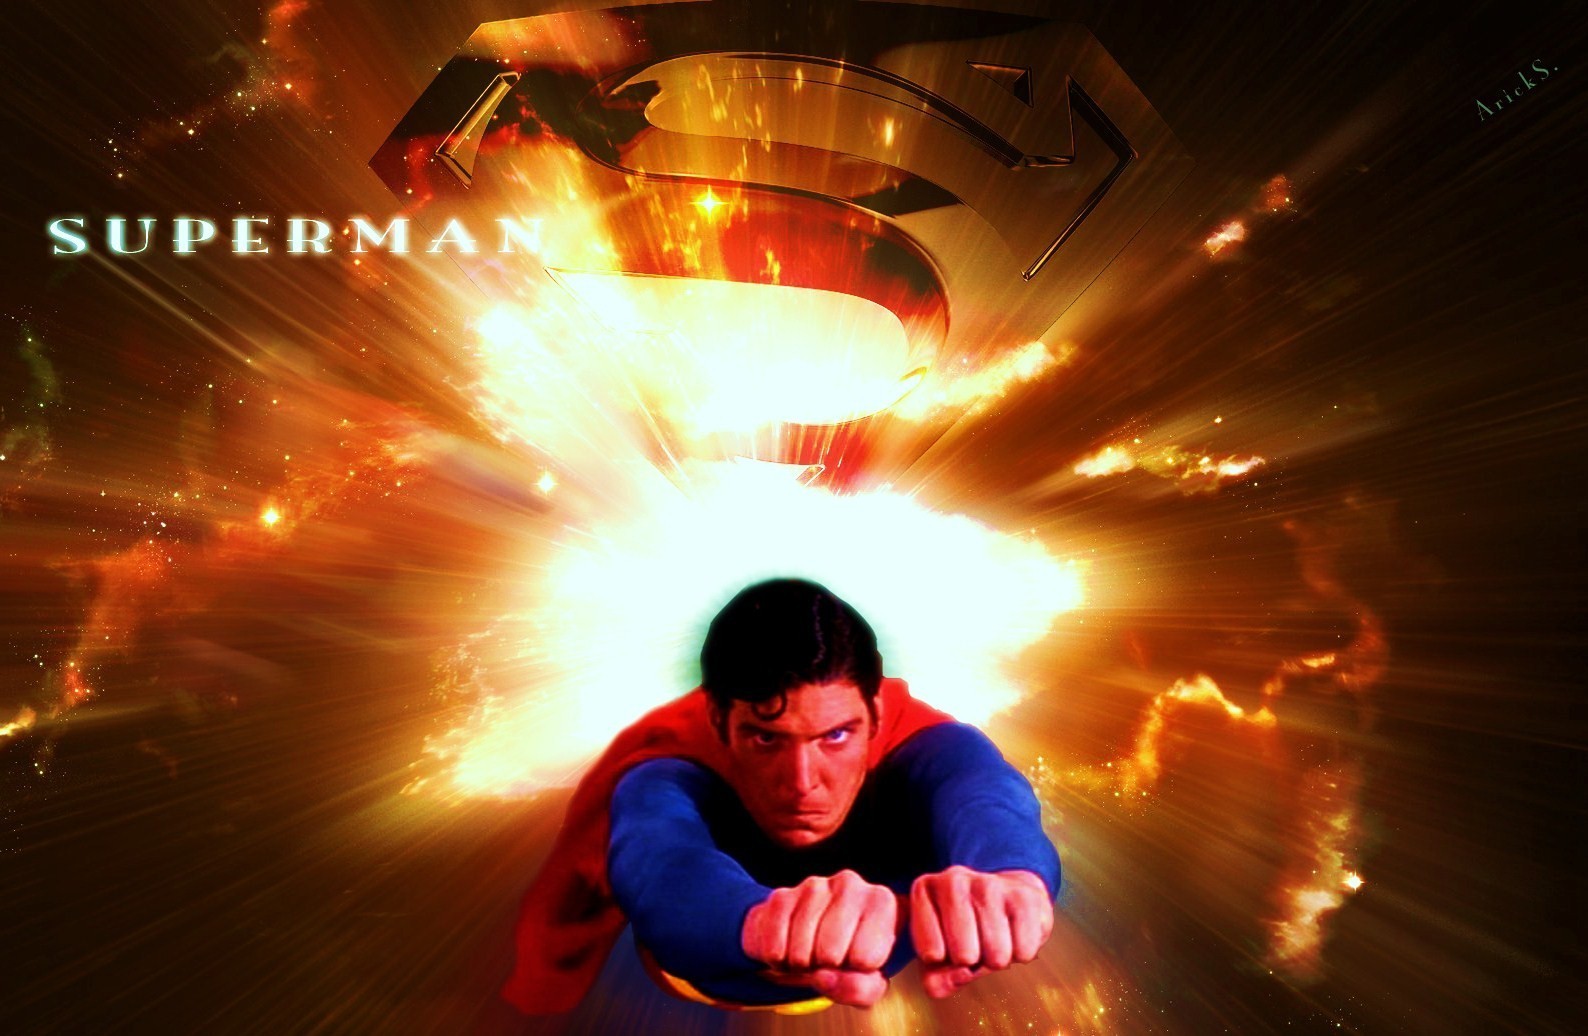 Superman The Movie - Superman (The Movie) Photo (20185727) - Fanpop